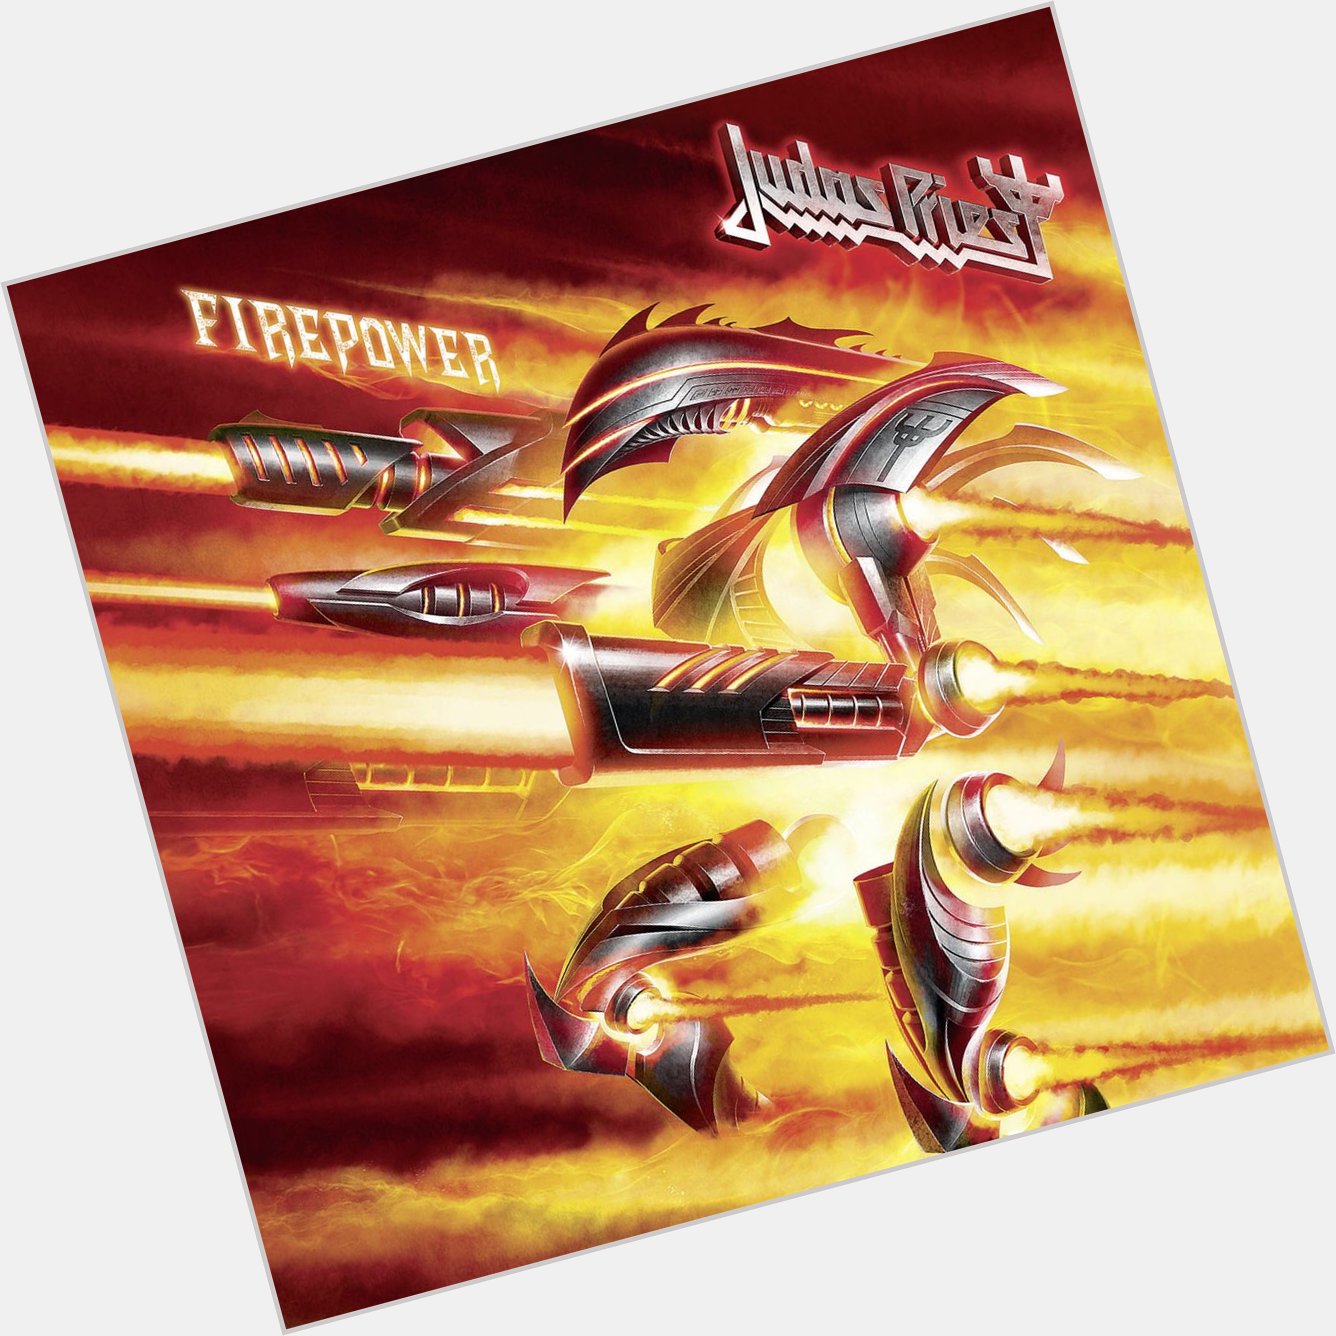  Lightning Strike by Judas Priest 

Happy Birthday, Rob Halford 